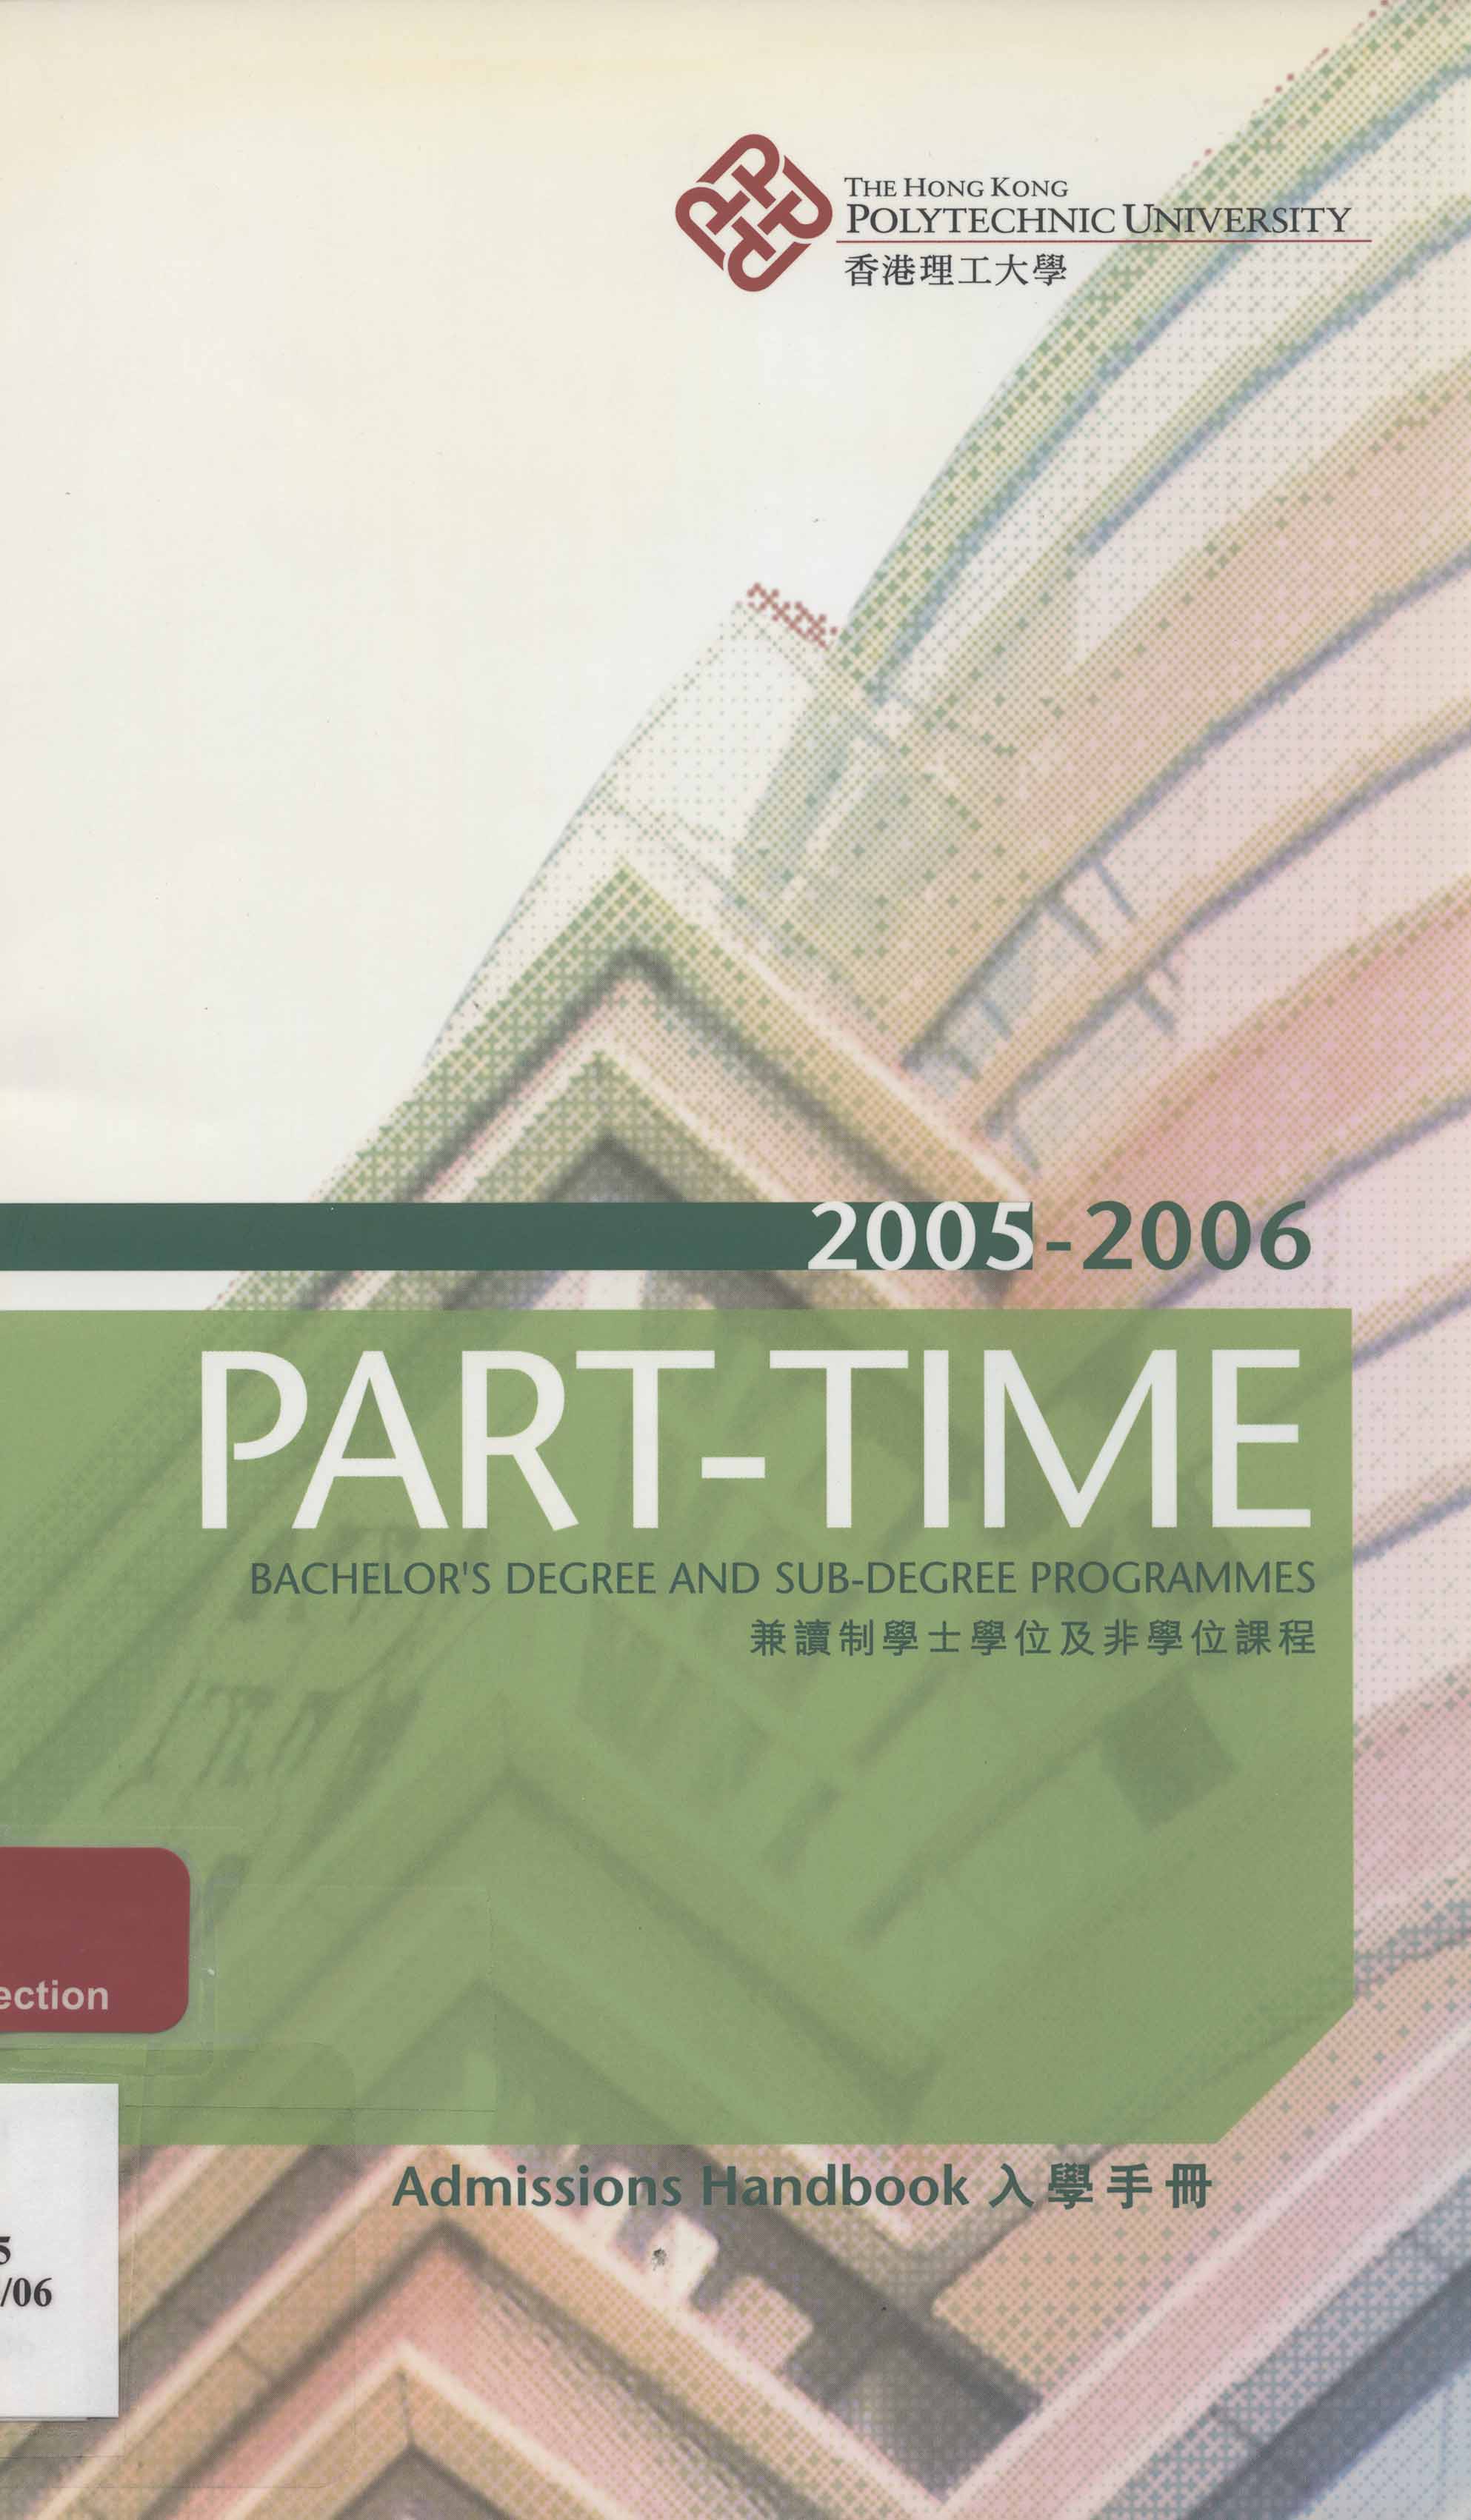 Hong Kong Polytechnic University. Prospectus. Part-time bachelor's degree and sub-degree programmes 2005/06